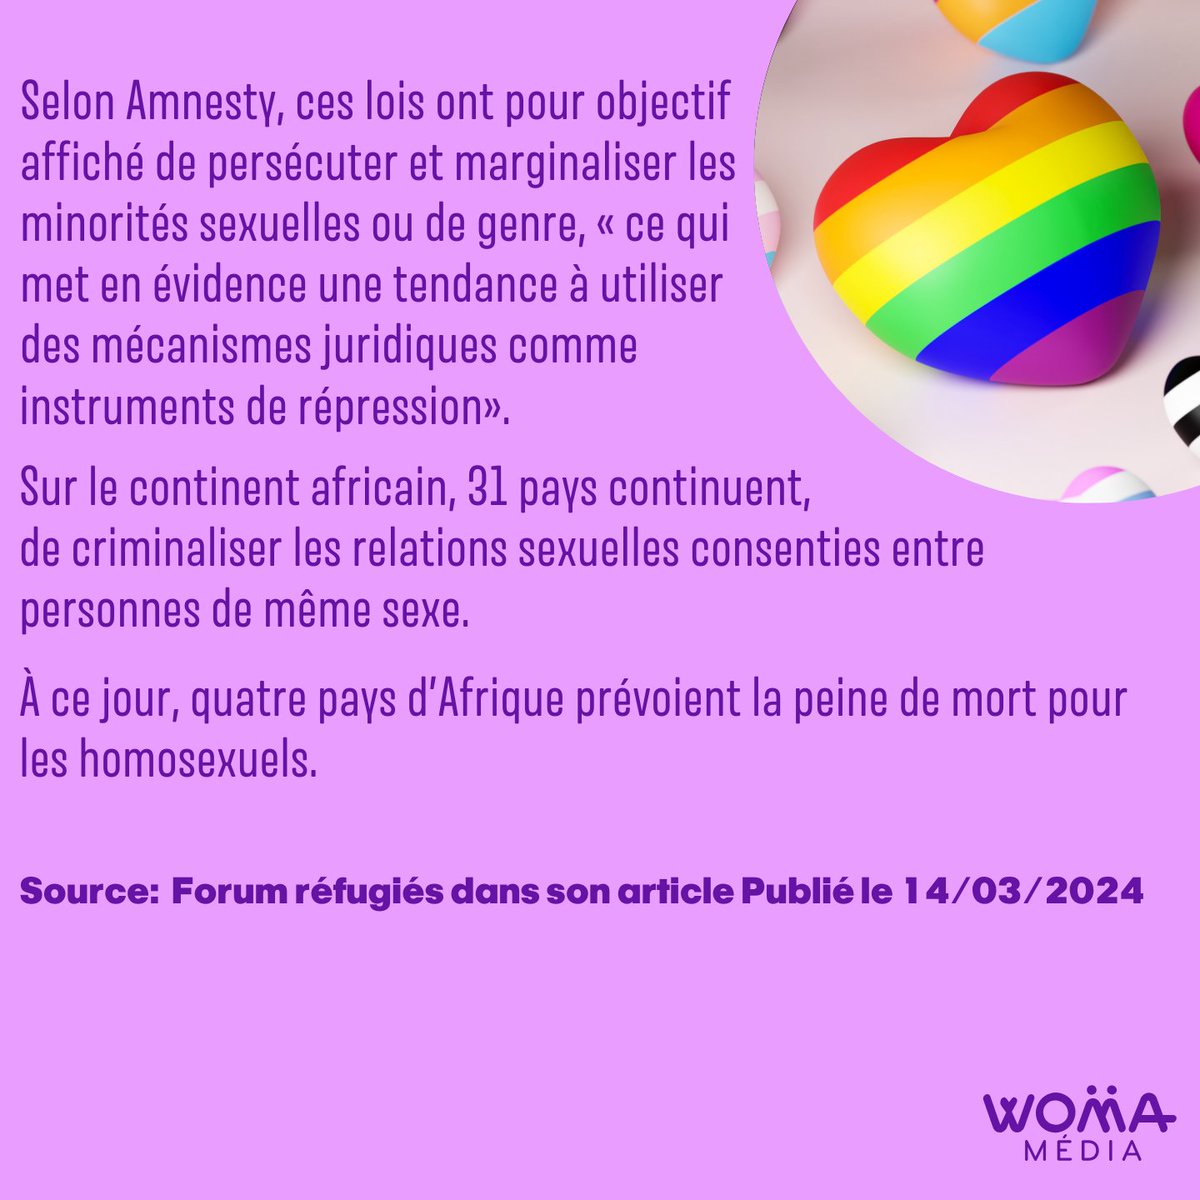 #womamedia
#lgbtqi+
#Actualité
#discoursantigenres